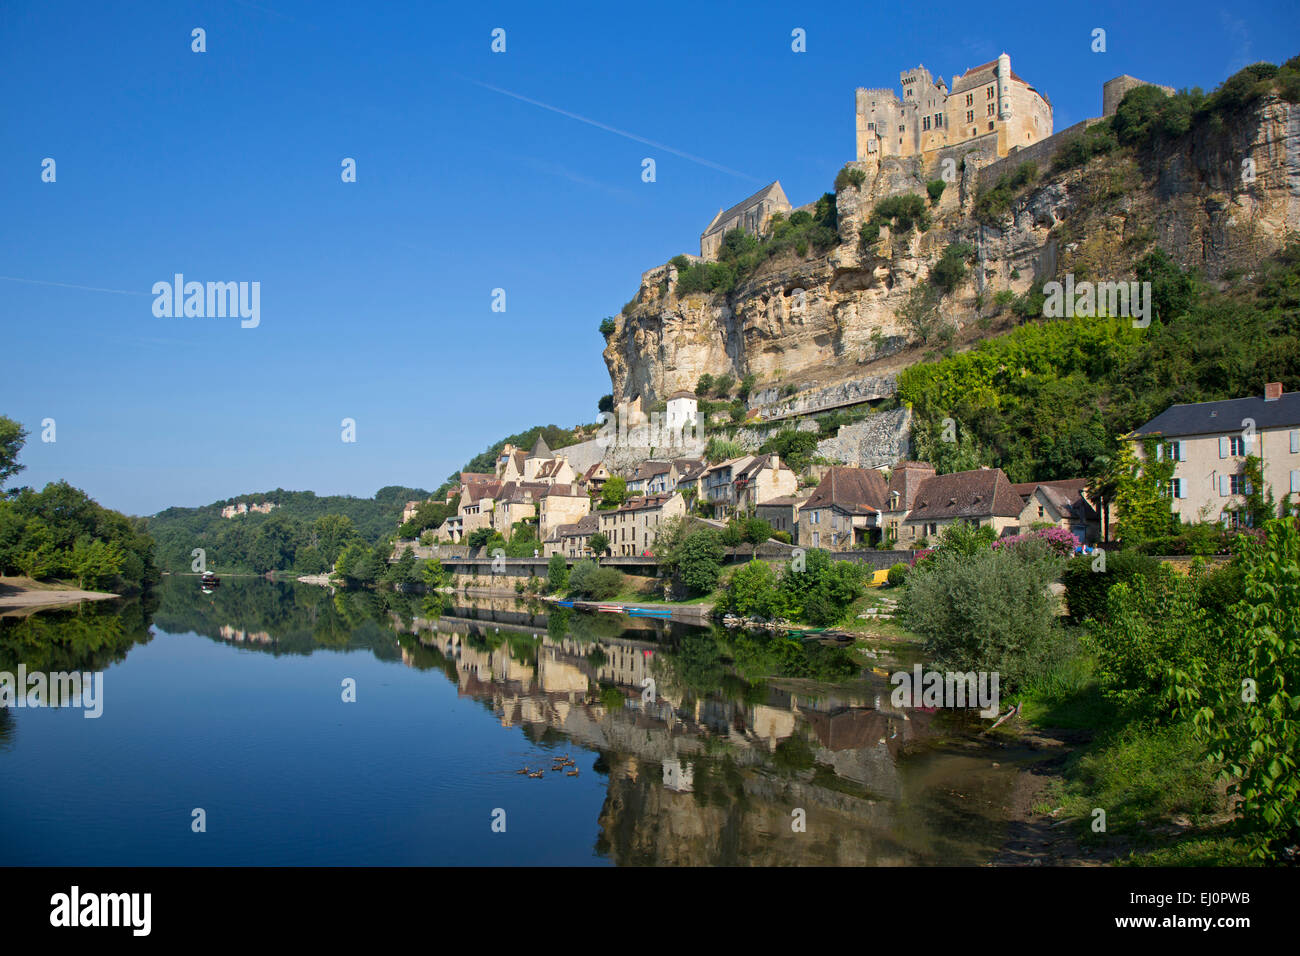 Beynac-Et-Cazenac, Sarlat la Caneda, Dordogne, Aquitaine, Frankreich, Dordogne Fluß, Chateau de Baynac, hoch oben auf der Klippe, com Stockfoto